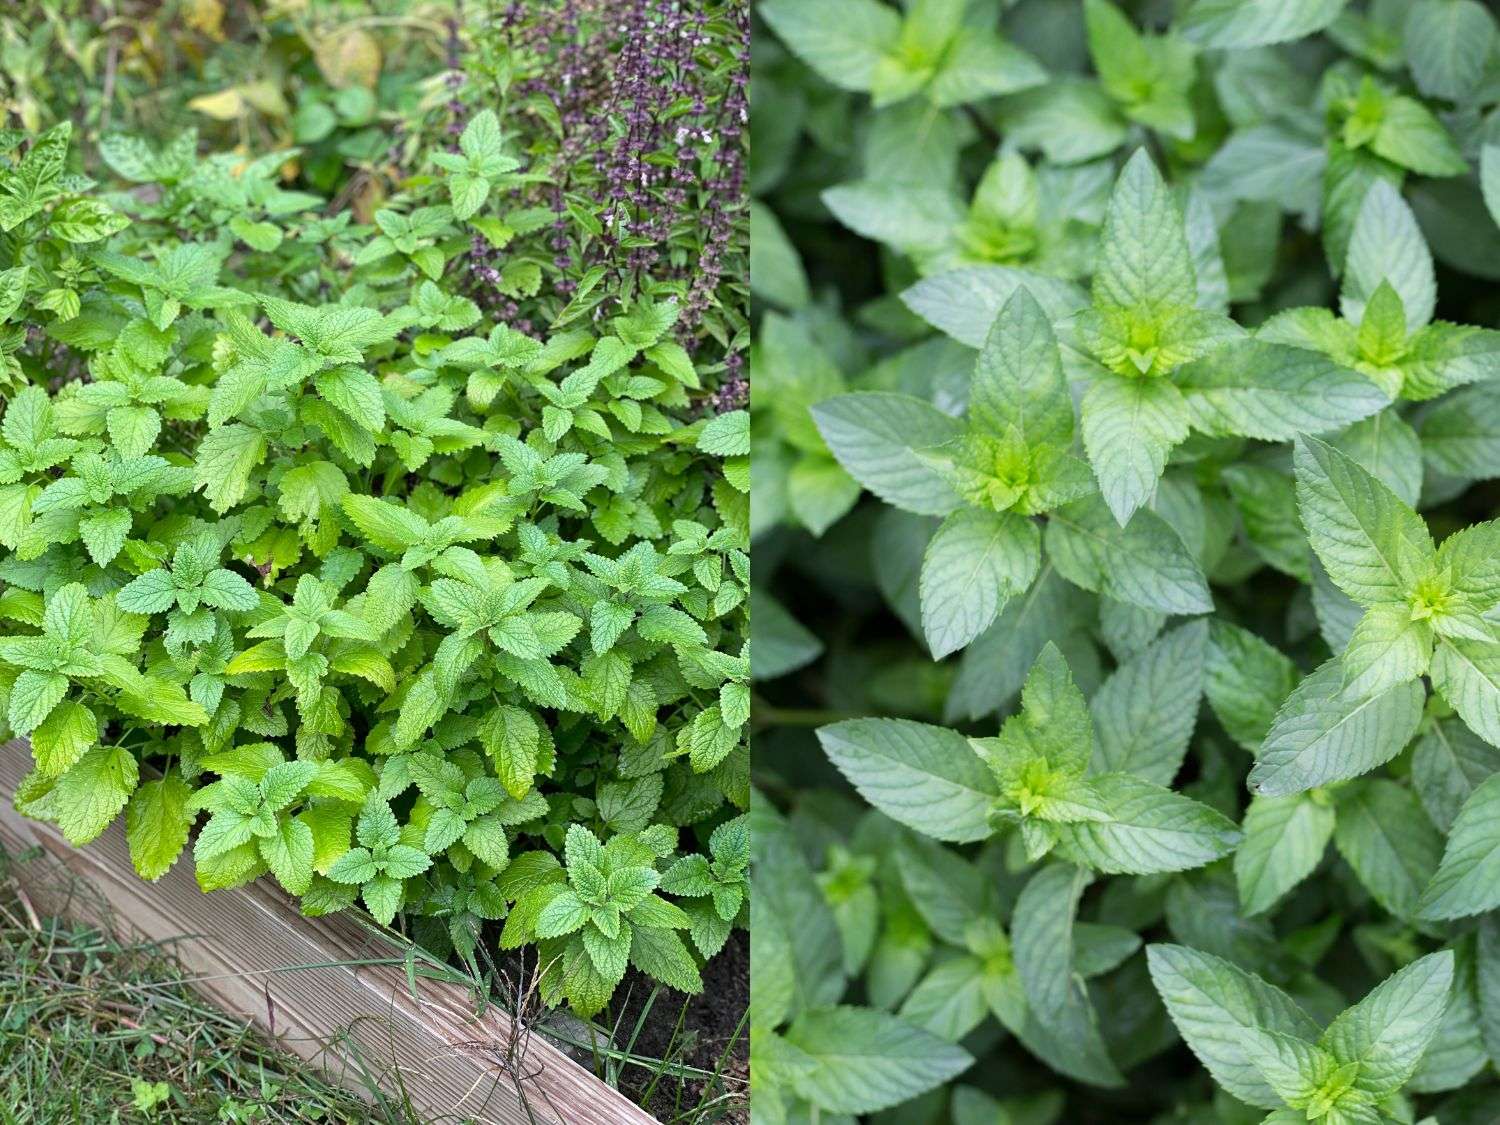 A side by side comparison photo of lemon balm vs mint in the garden